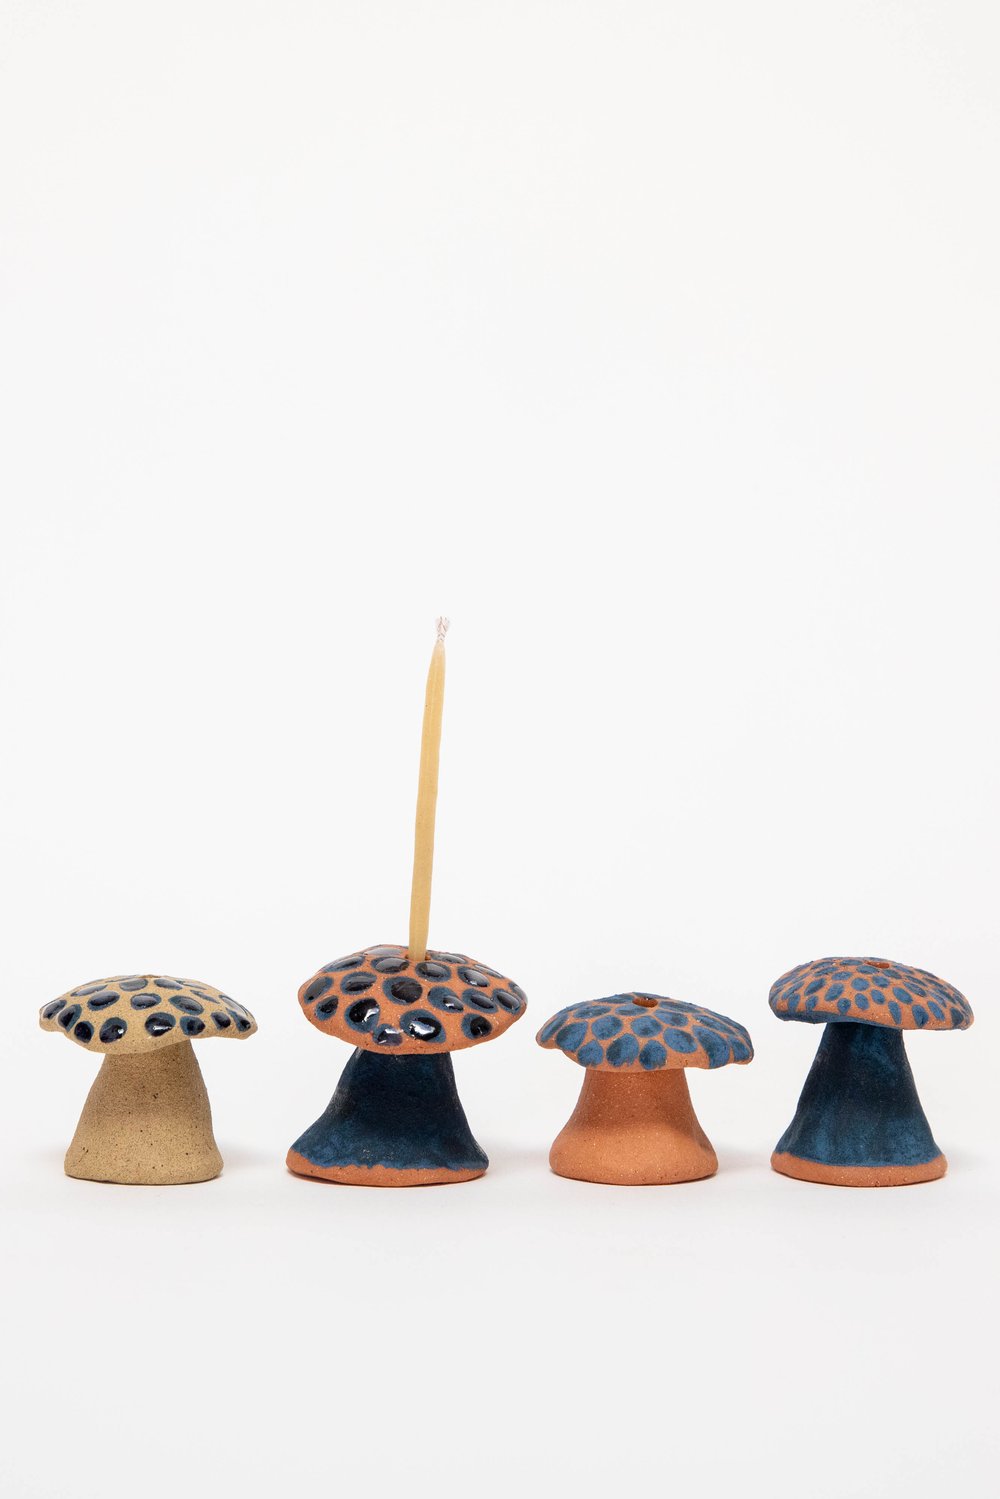 Image of Indigo Mushroom Birthday Candle Holders - Dotted Cap